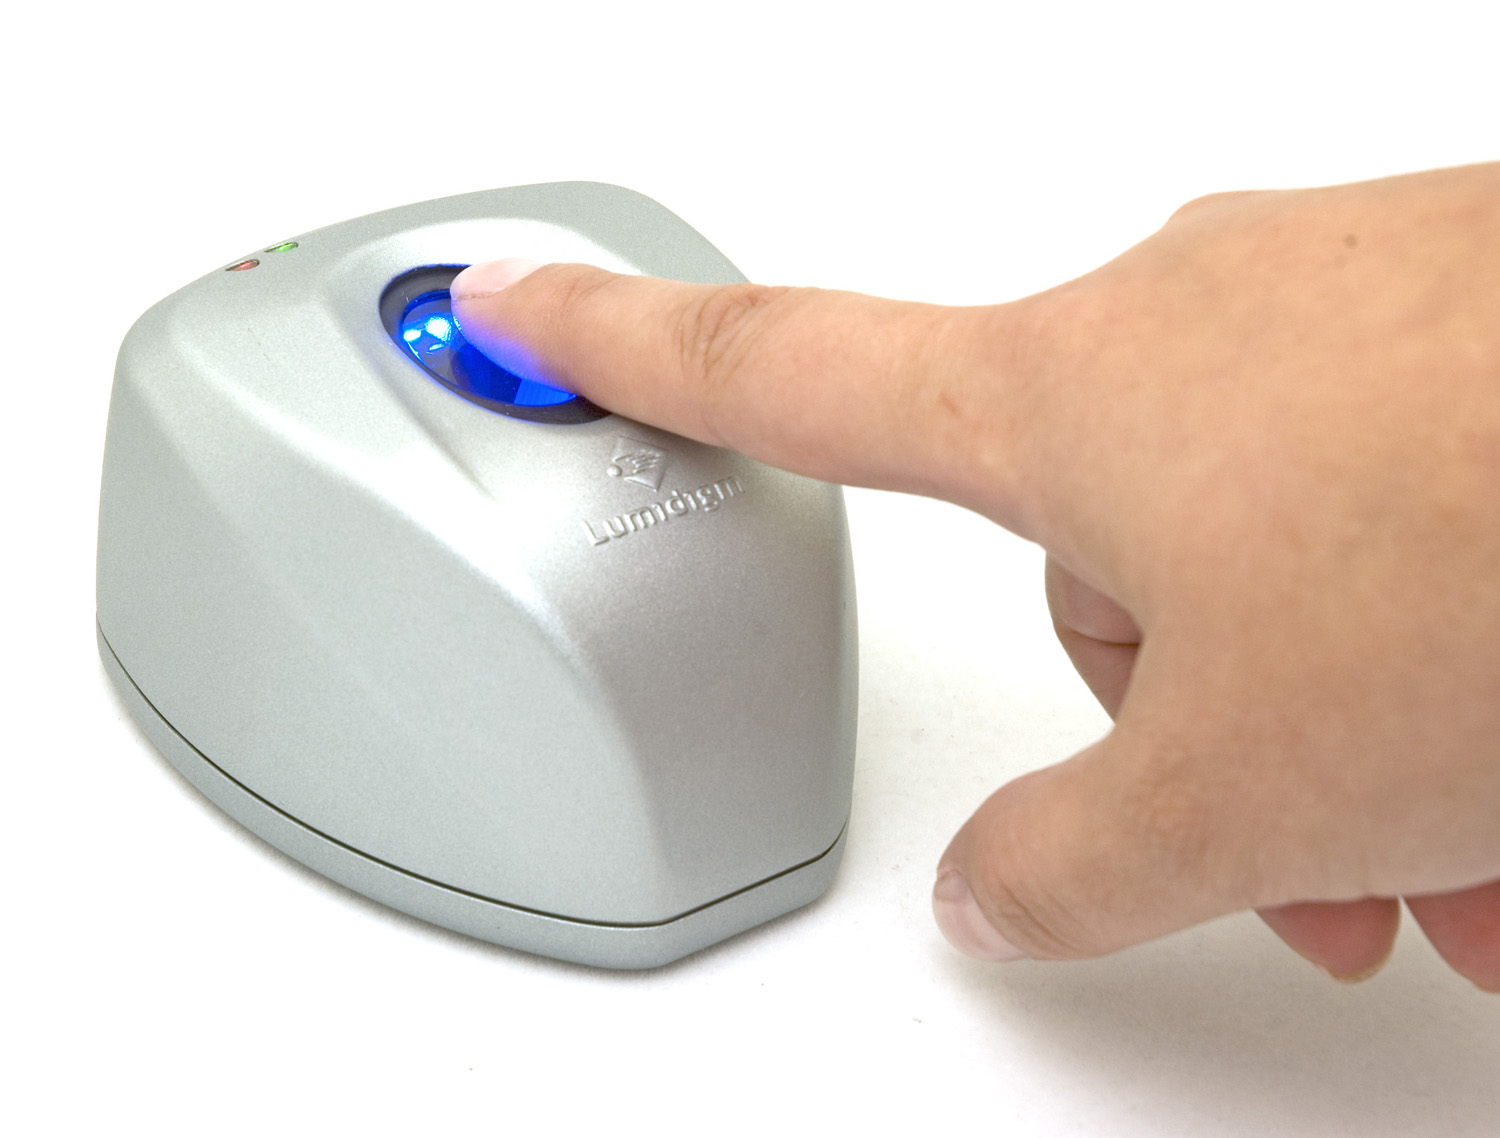 Biometric Sensor Market